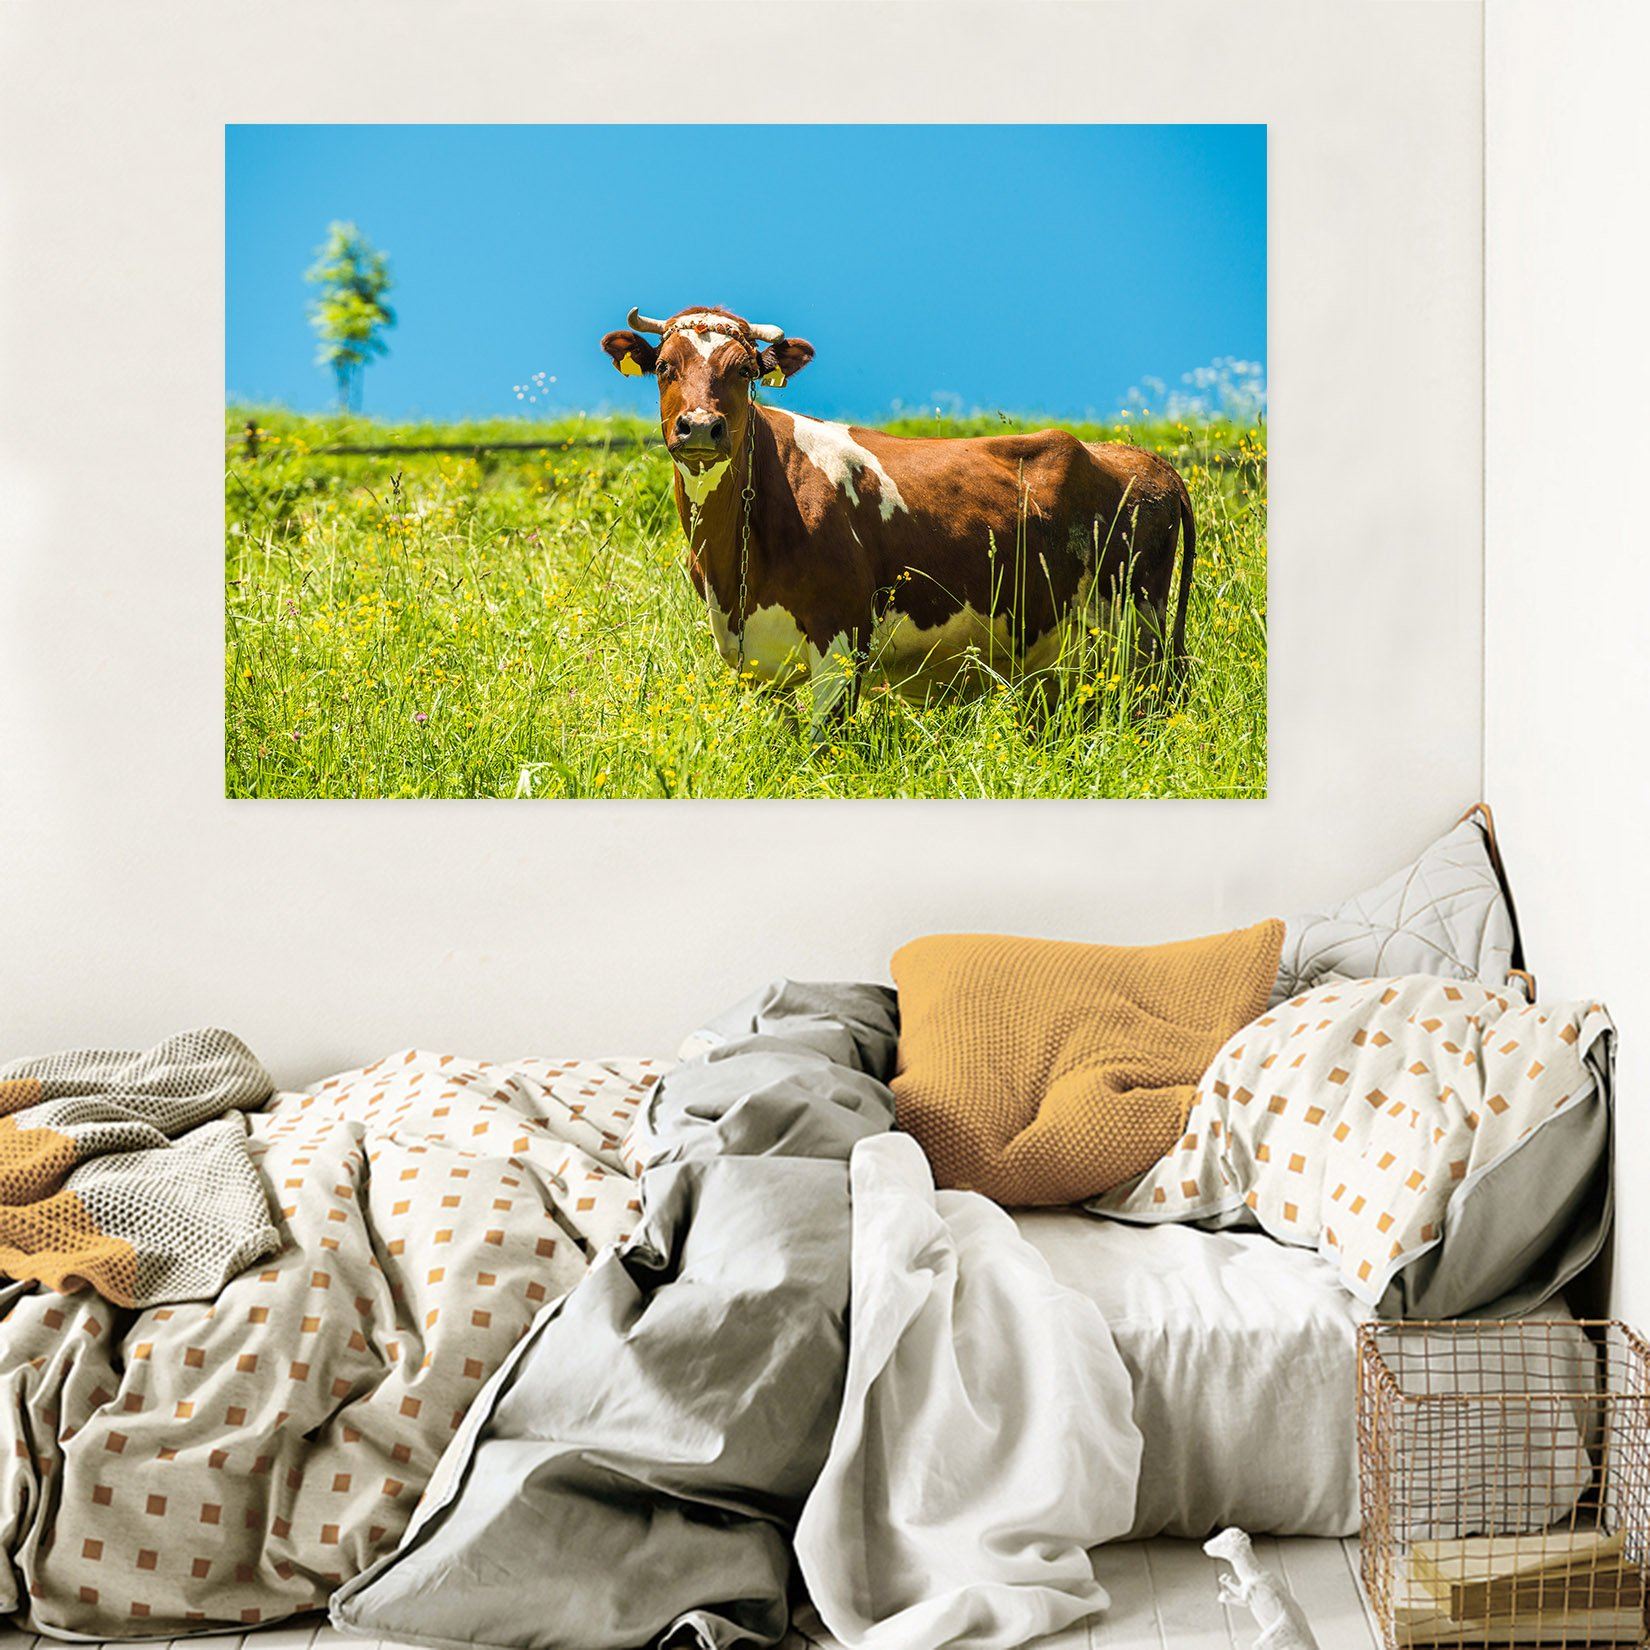 3D Cow Nature 21 Animal Wall Stickers Wallpaper AJ Wallpaper 2 